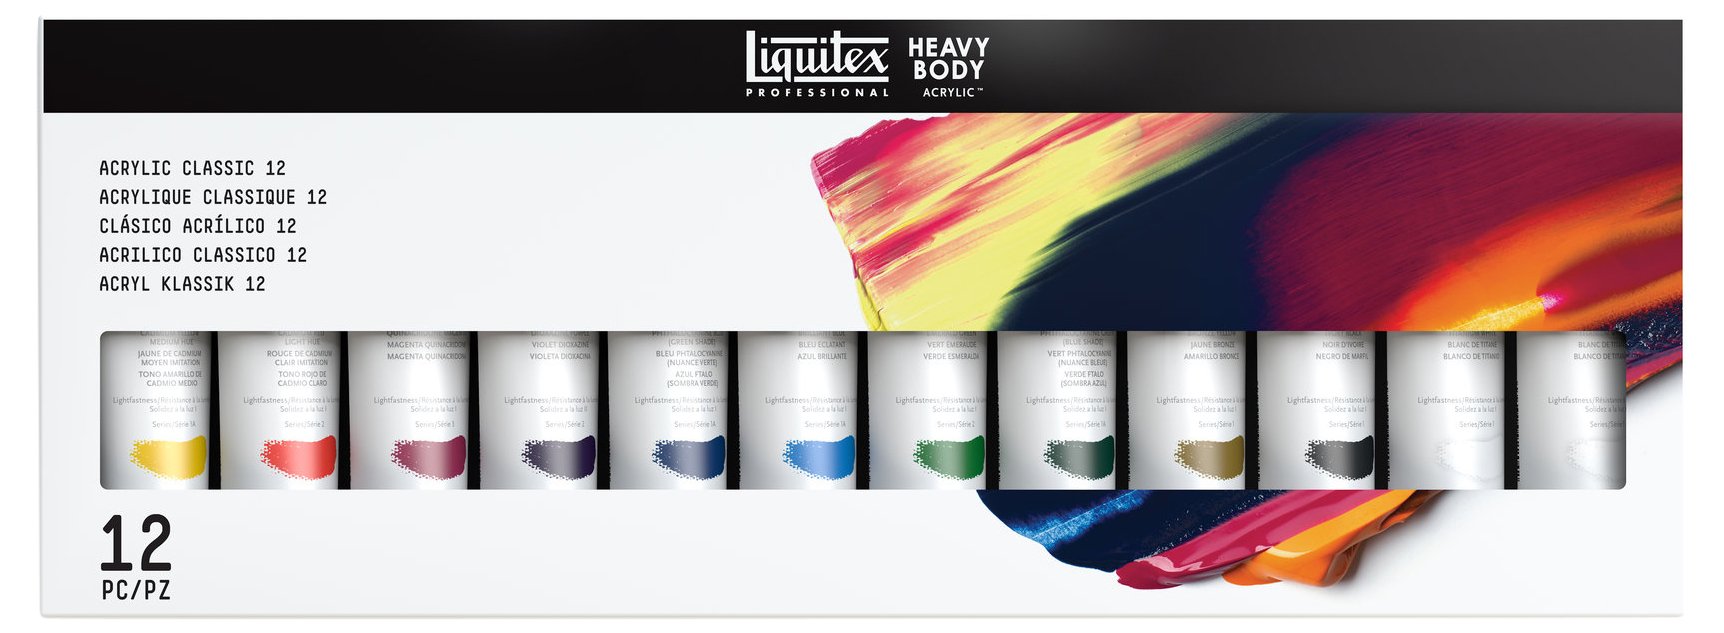 Liquitex Heavy Body Acrylic 2oz Light Blue Permanent